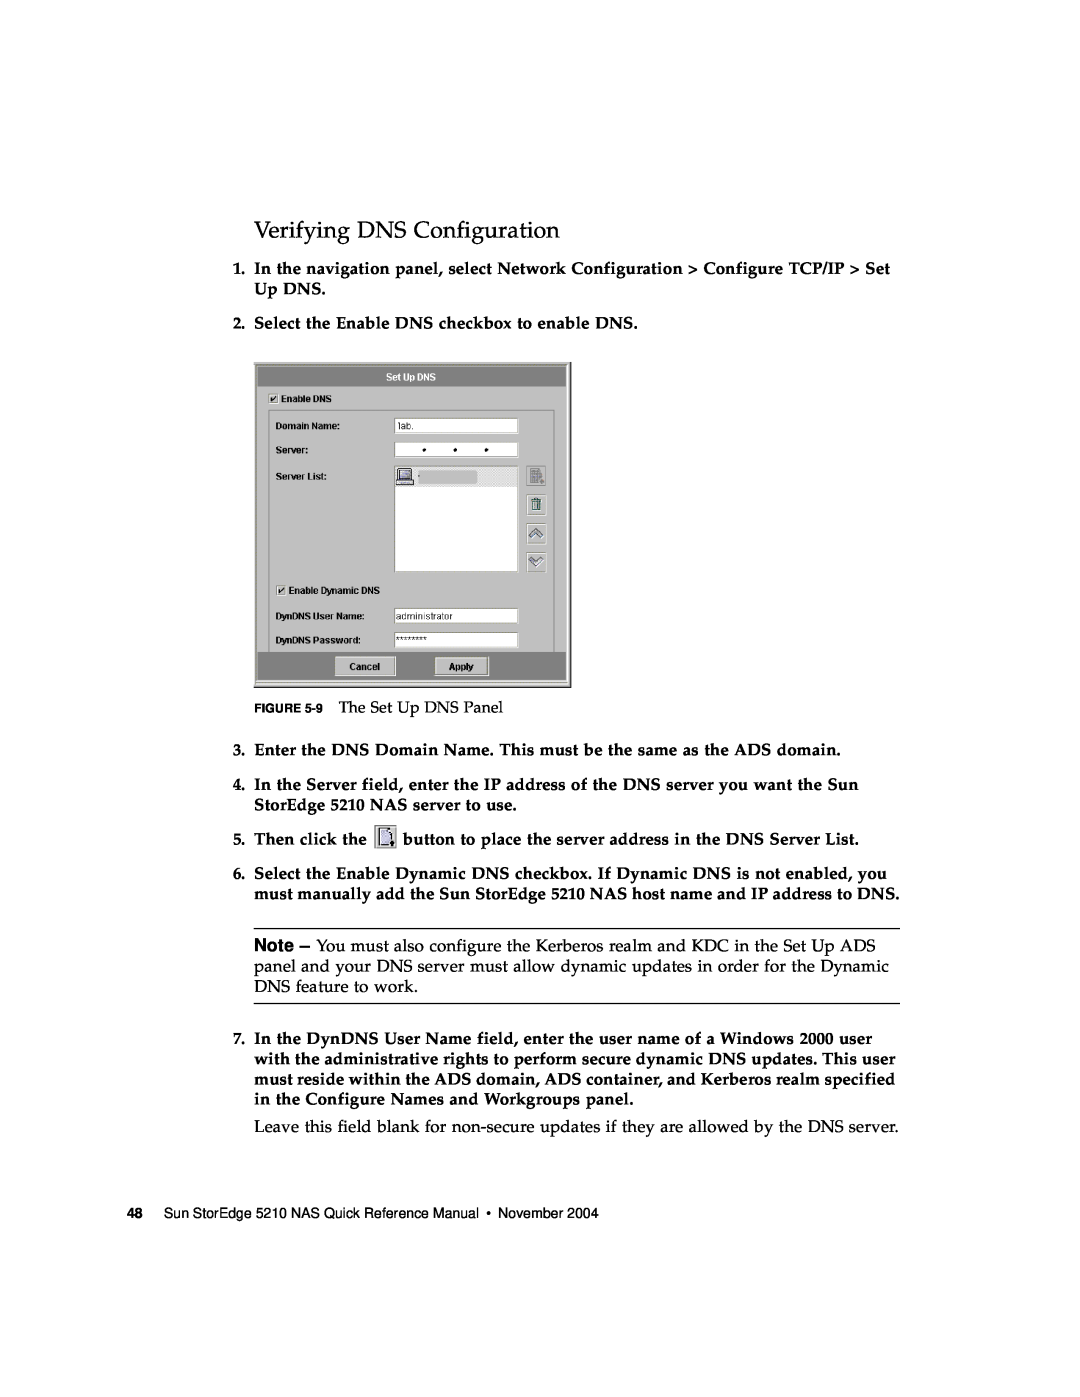 Sun Microsystems 5210 NAS manual Verifying DNS Configuration, 9 The Set Up DNS Panel 